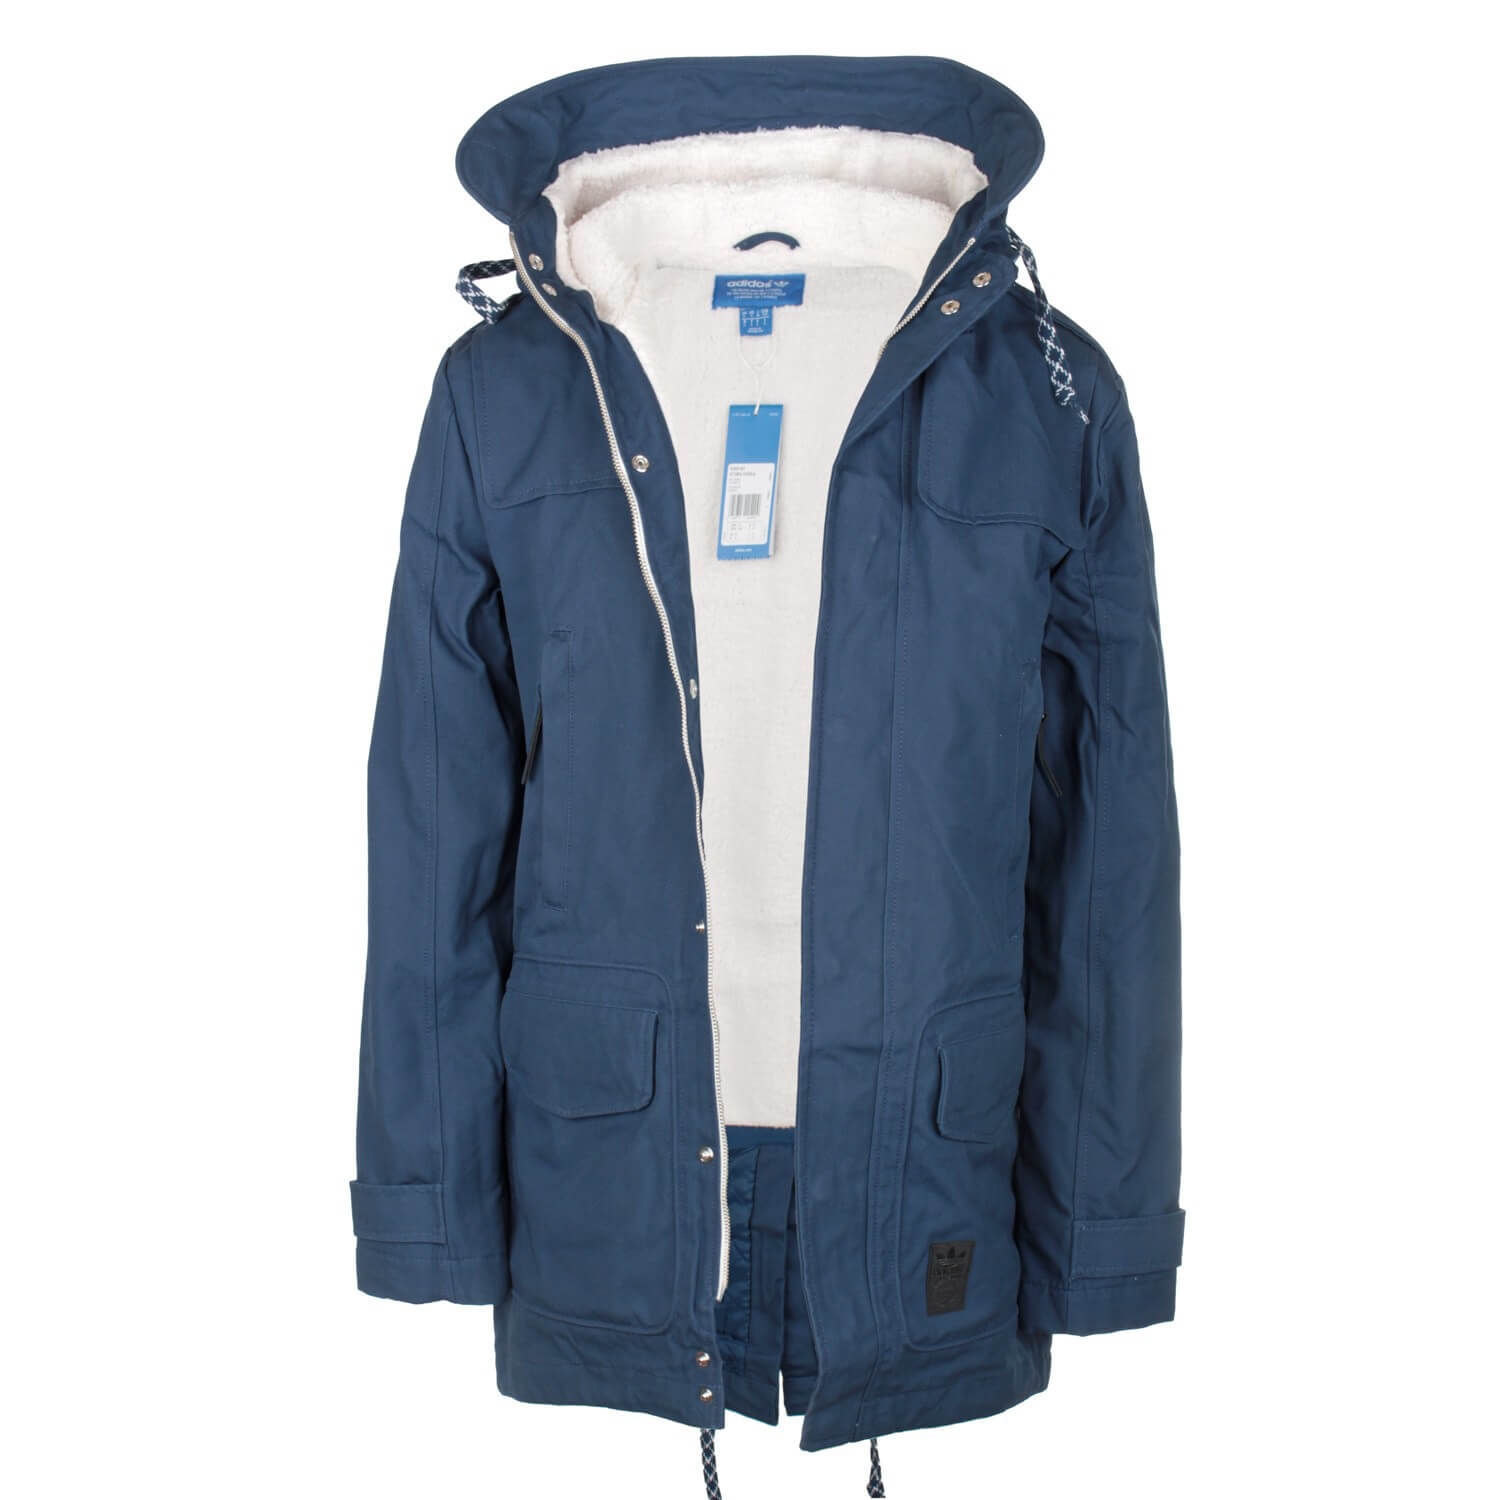 Adidas Storm Parka Herren Jacke Winter Mantel navy blau | eBay